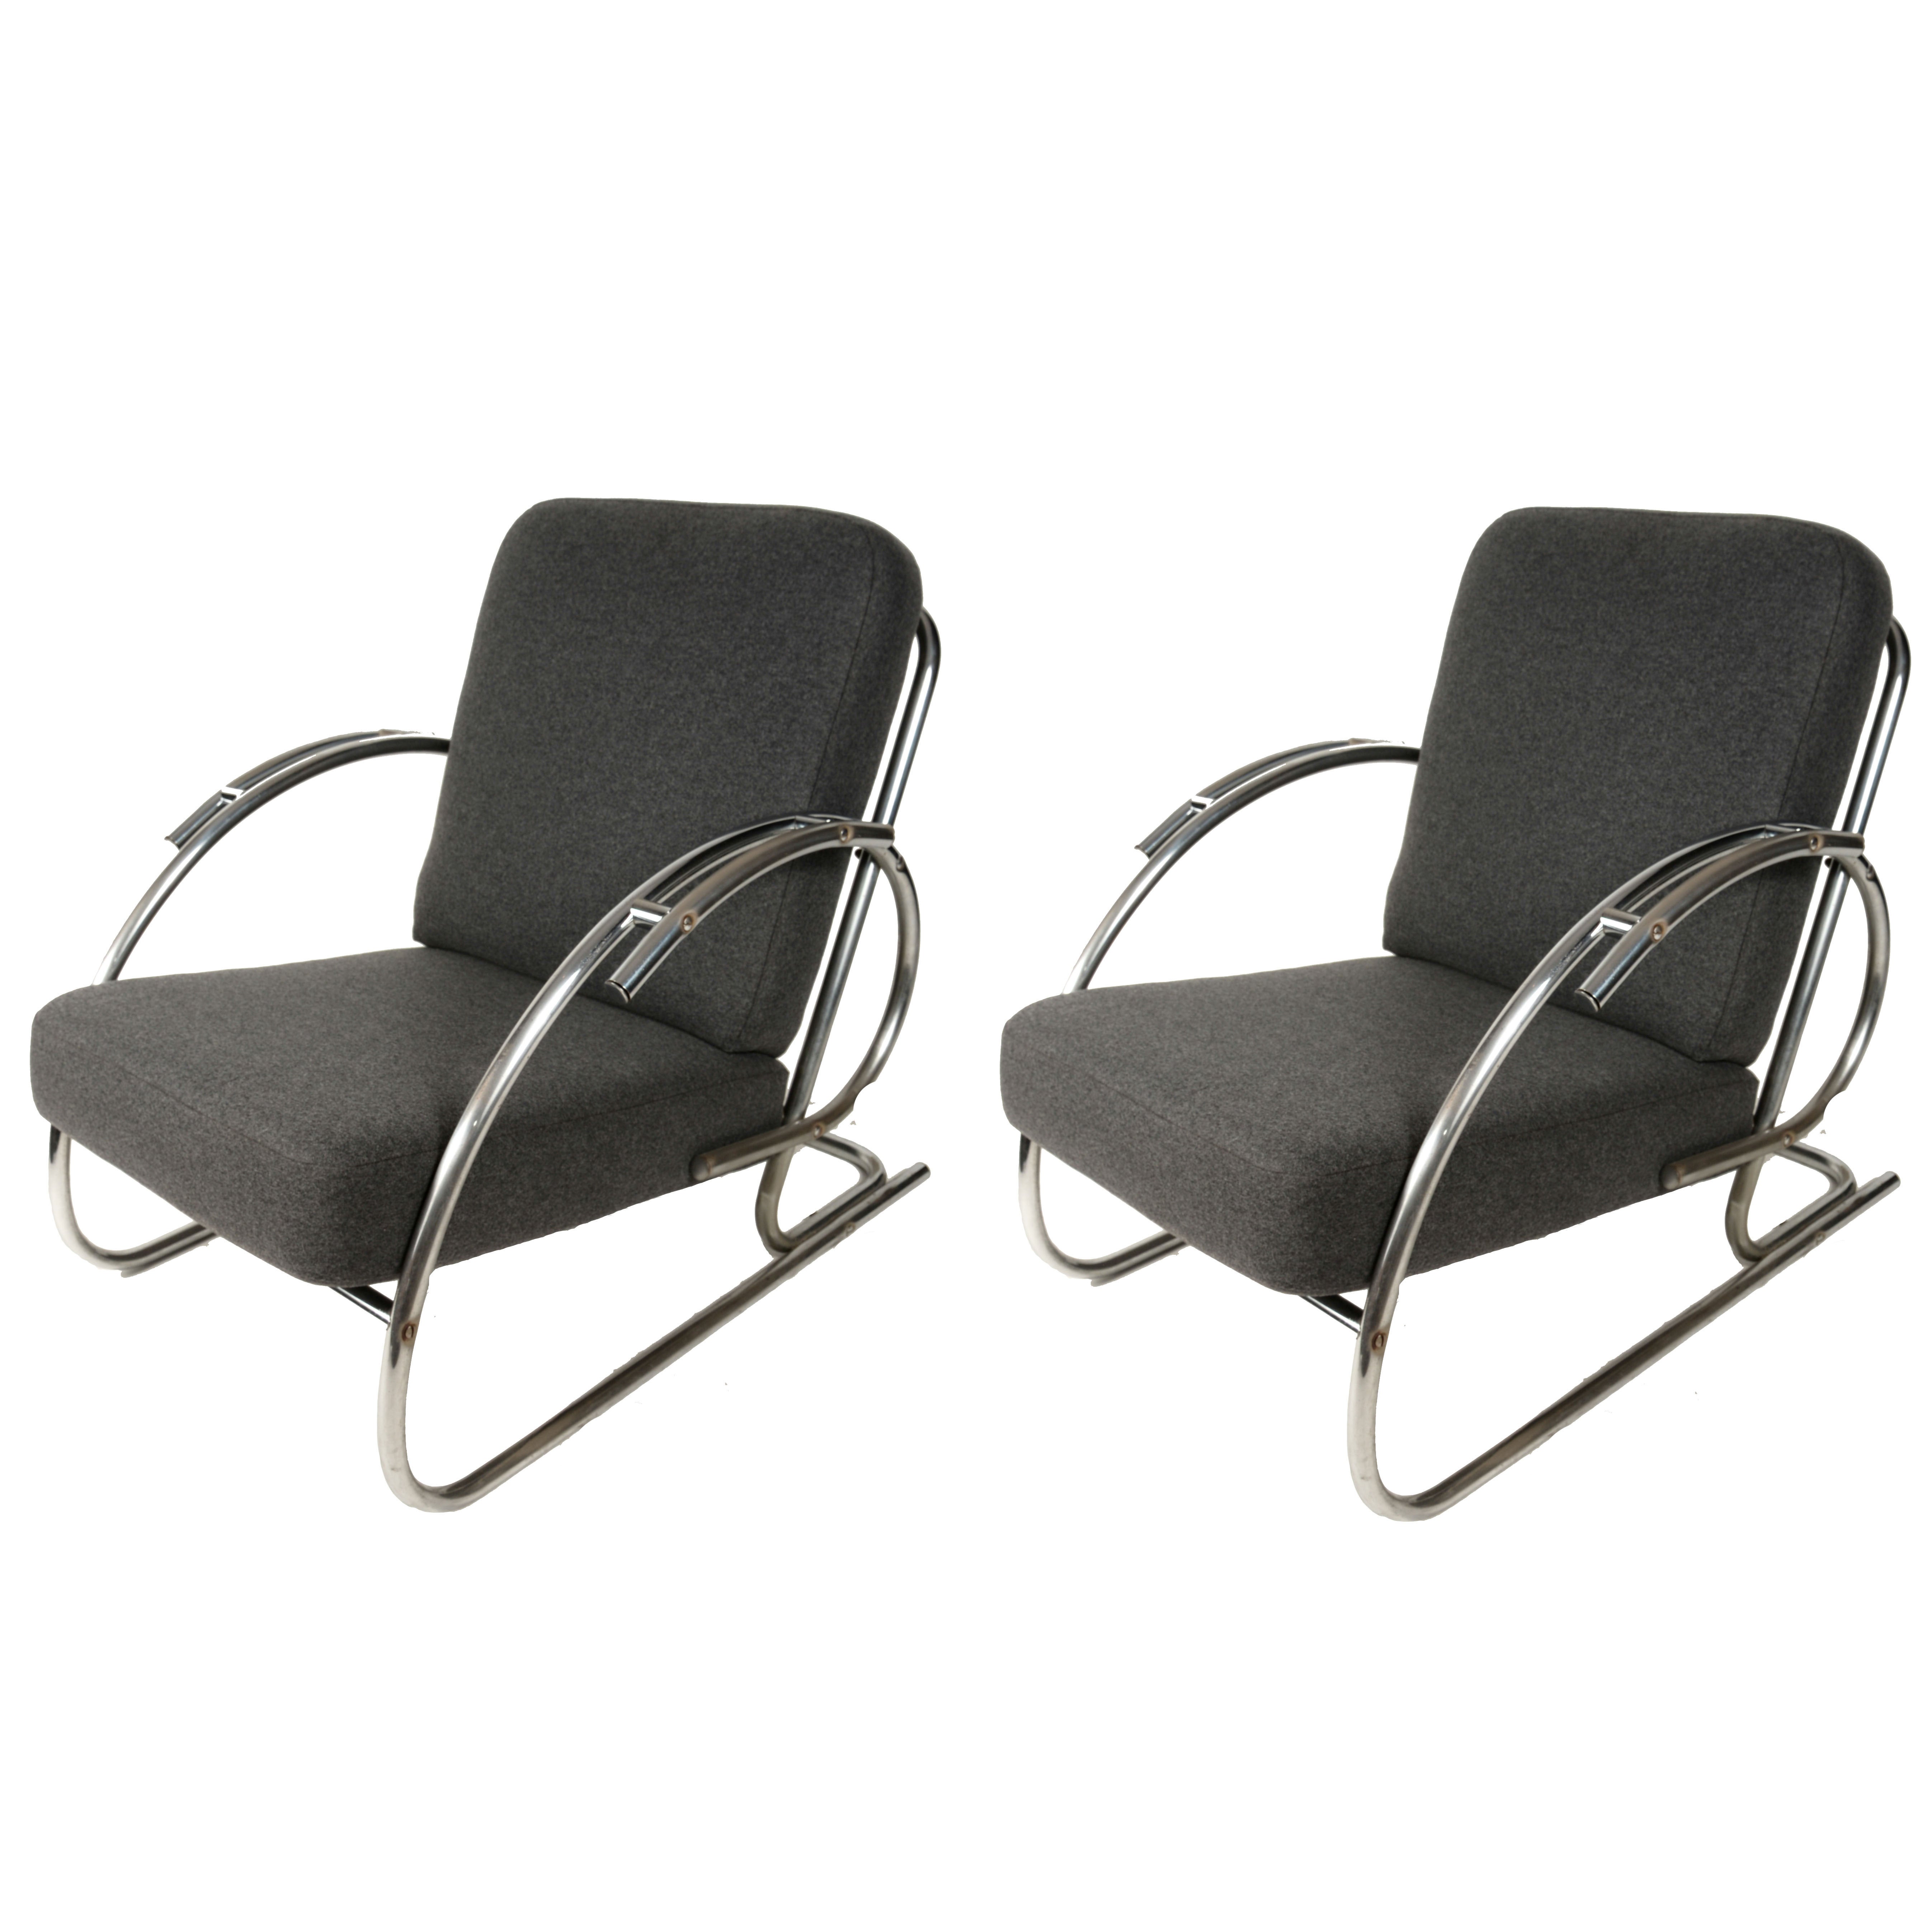 Pair of Bauhaus Chairs